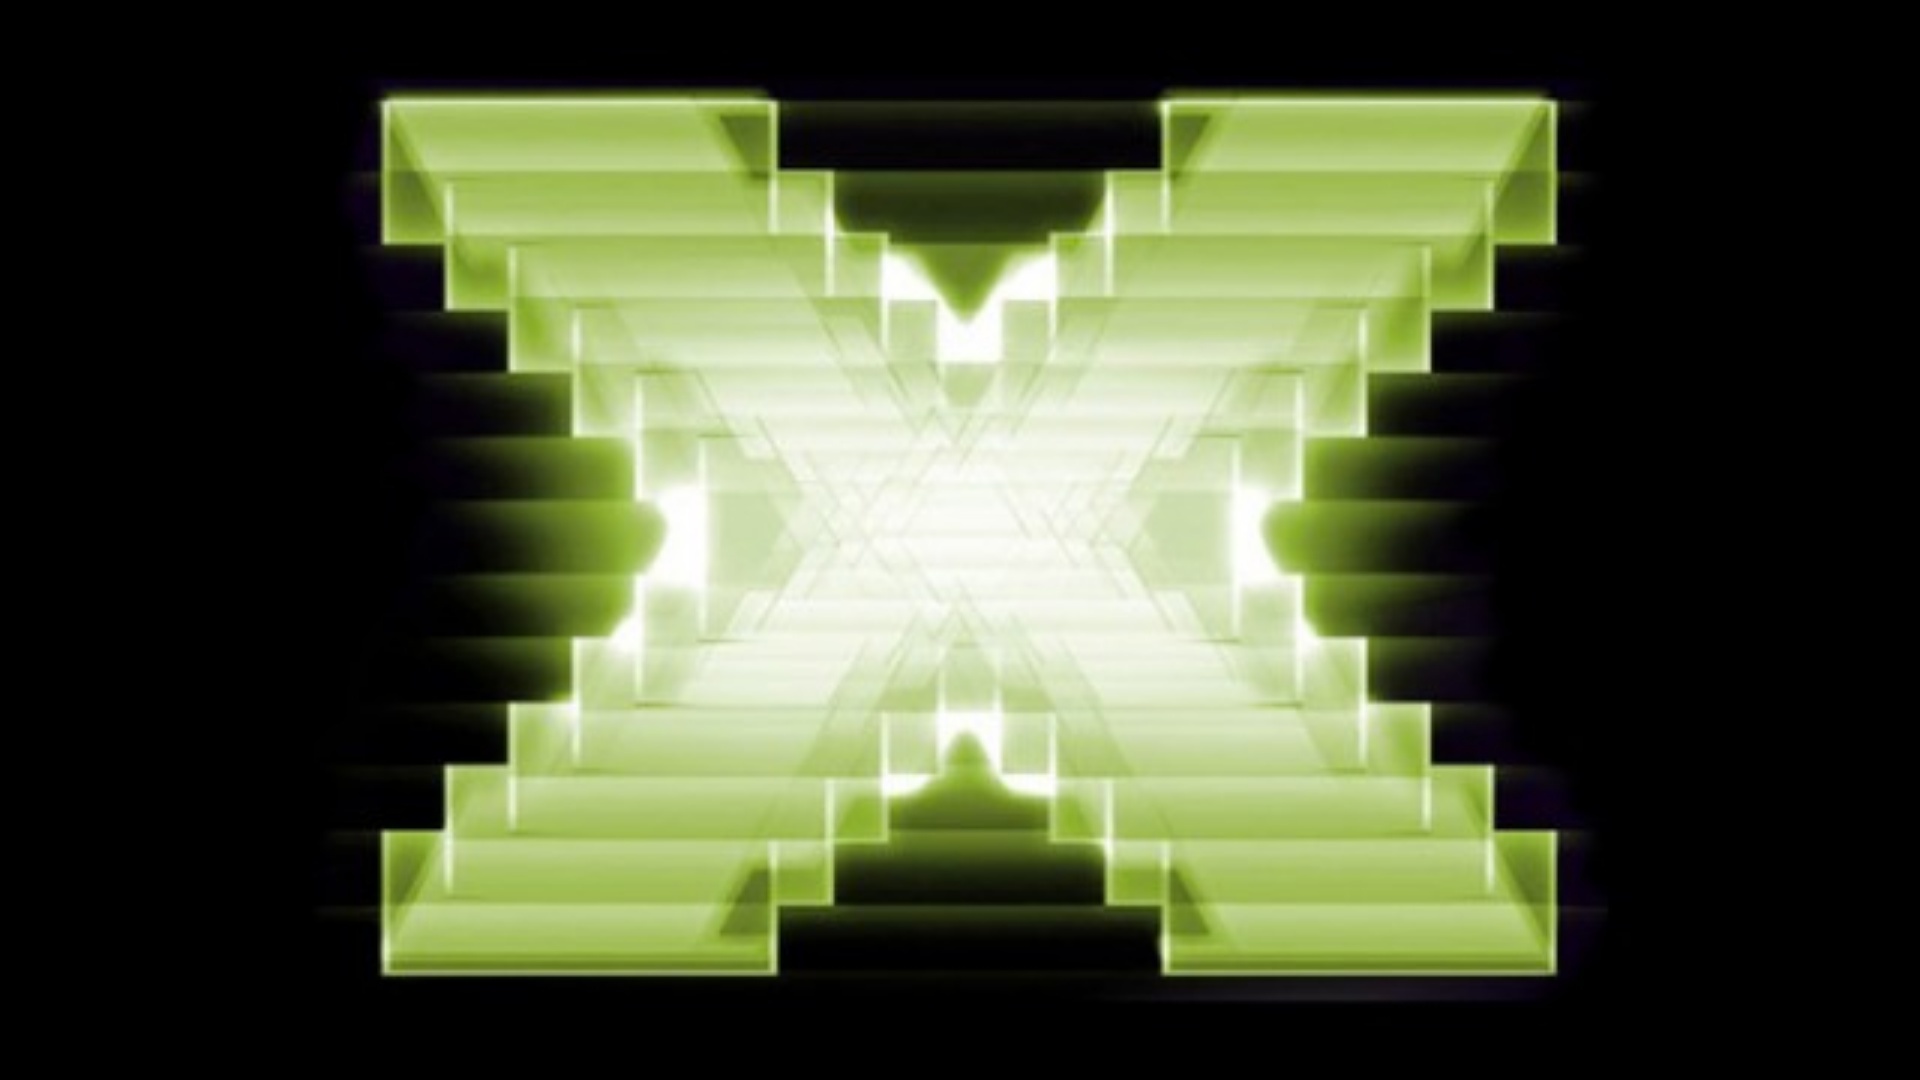 Directx offline. DIRECTX. DIRECTX logo transparent 2009. DIRECTX logo transparent.